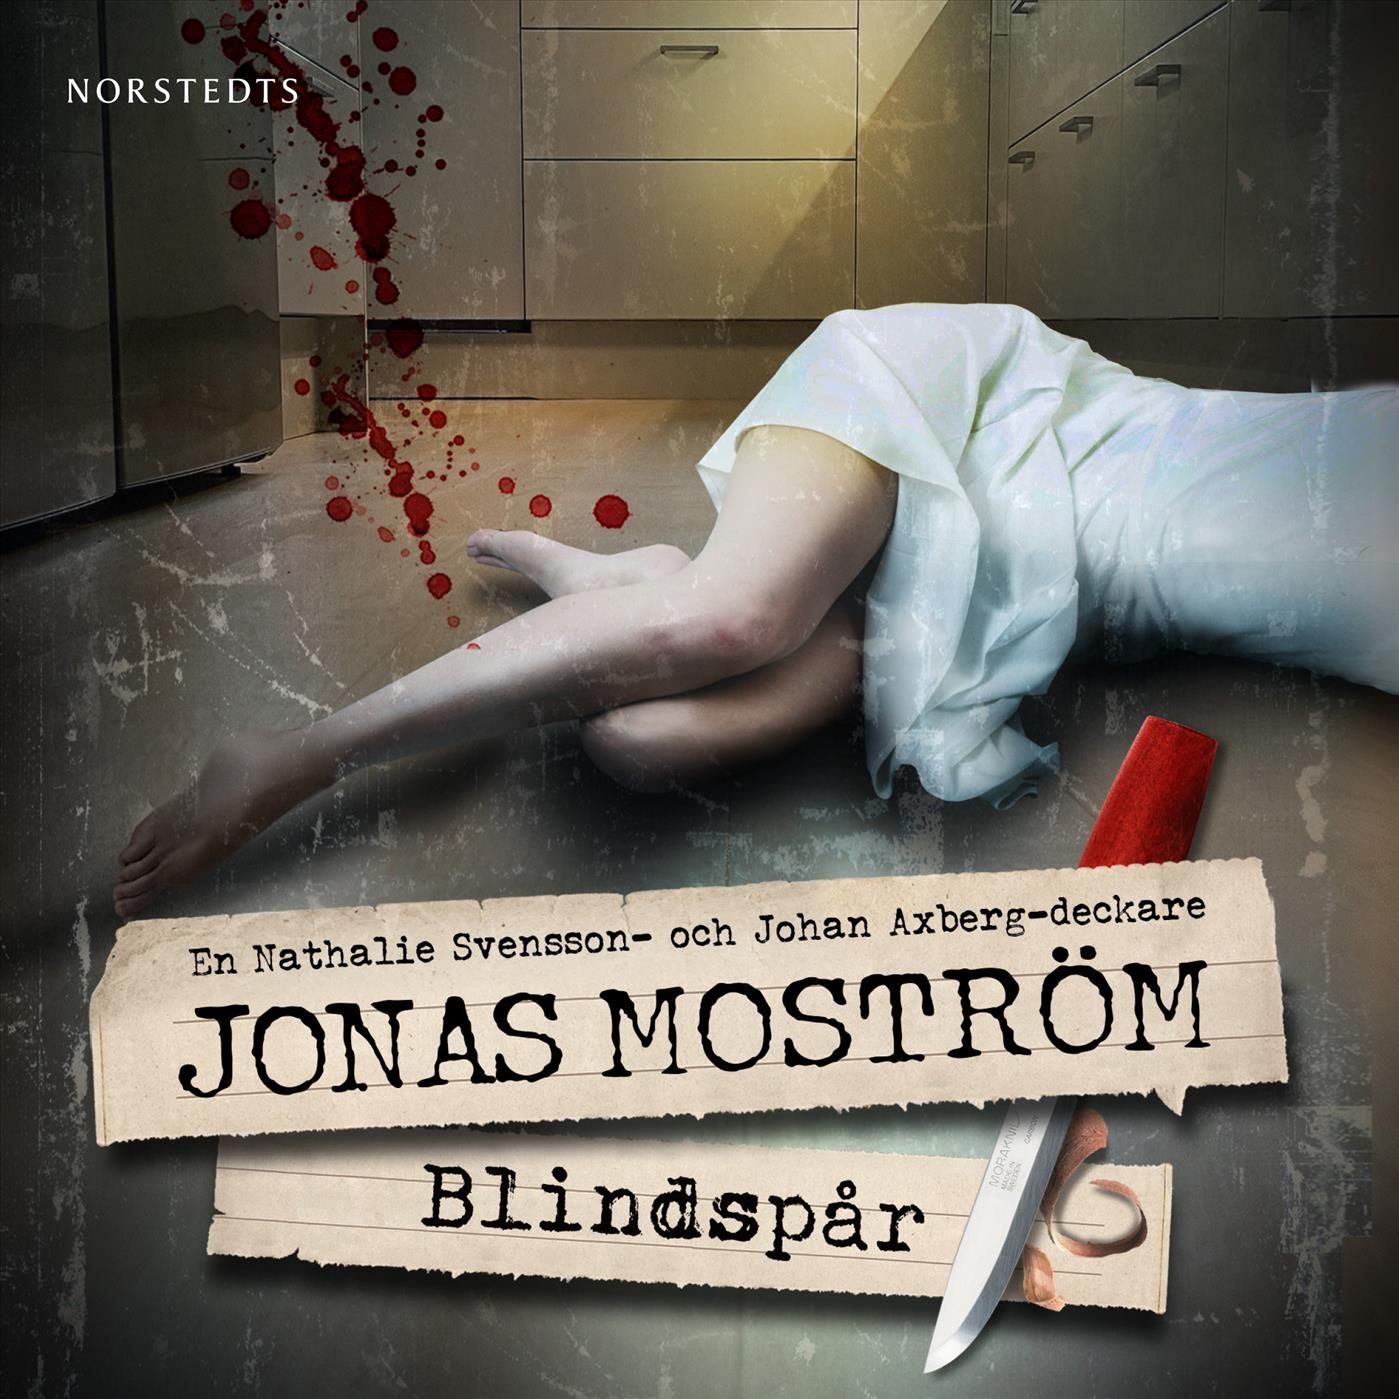 Blindspår, audiobook by Jonas Moström